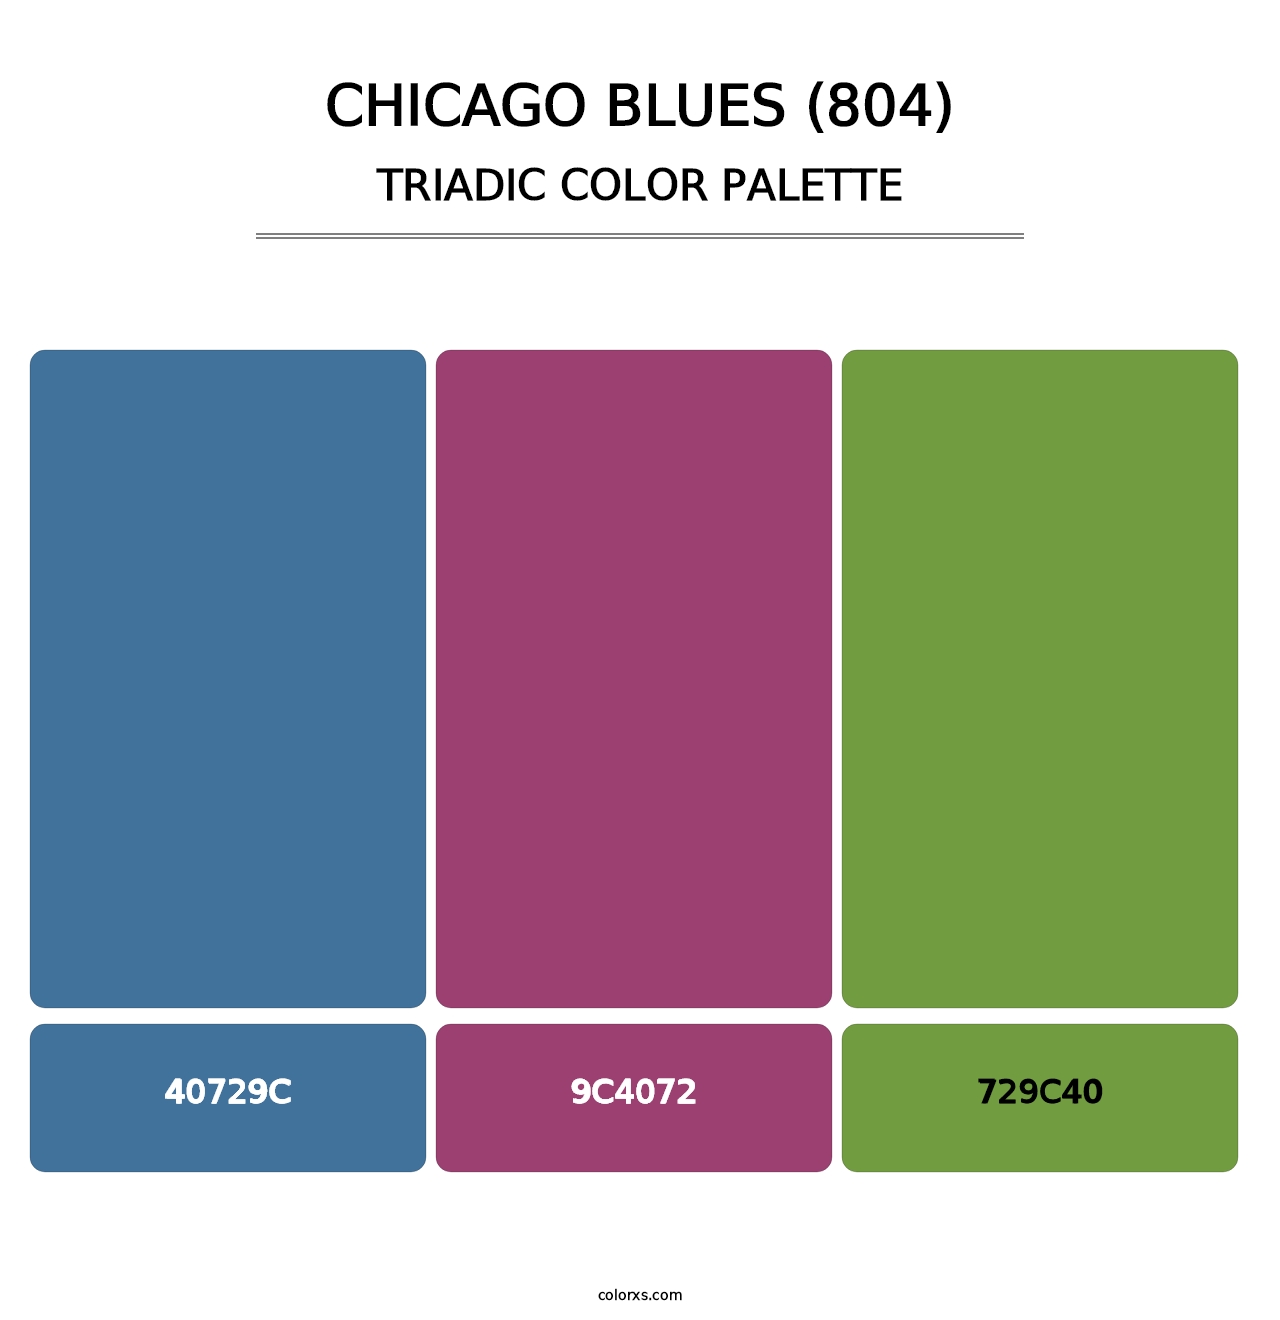 Chicago Blues (804) - Triadic Color Palette